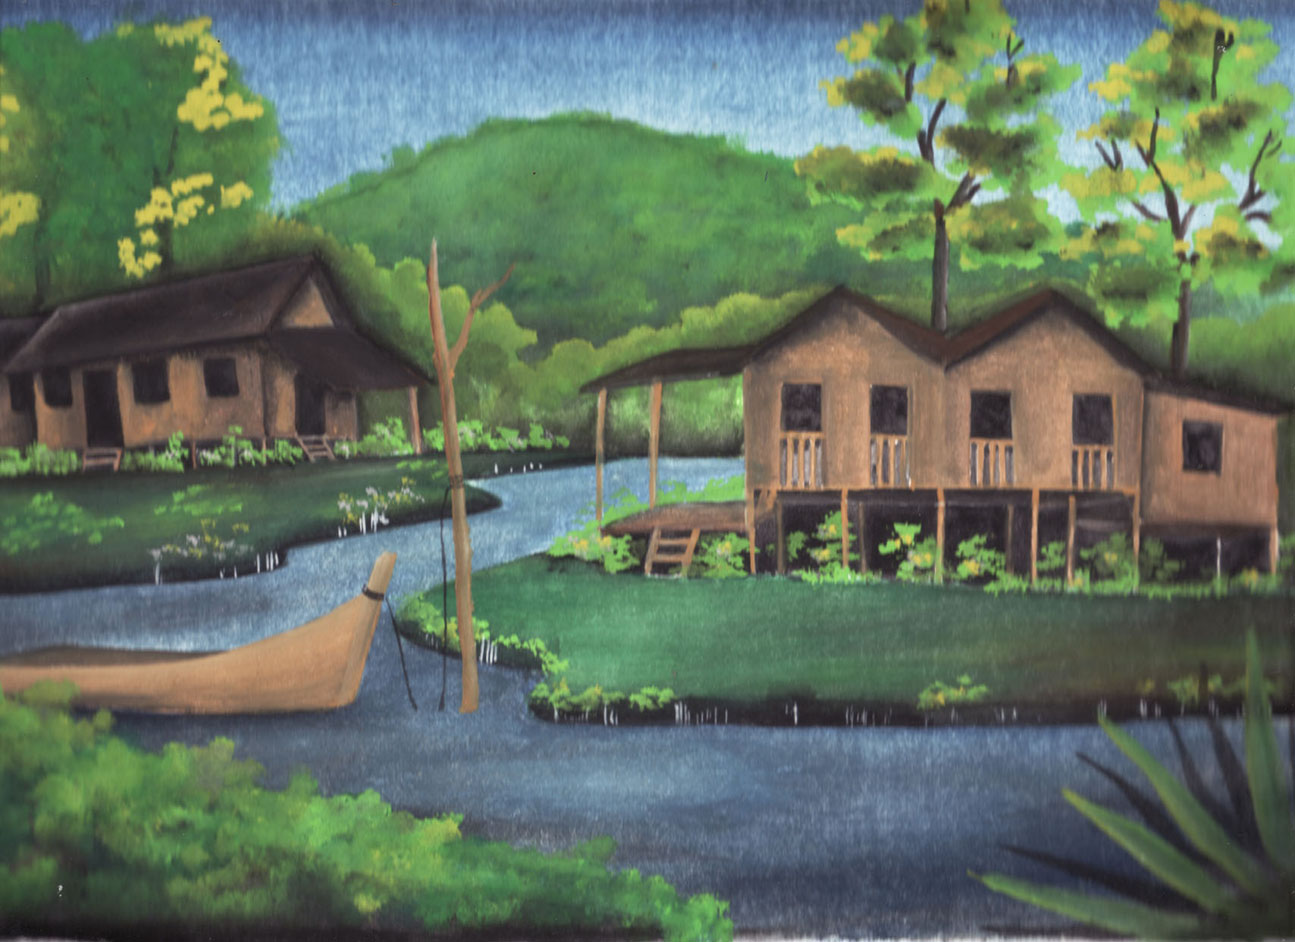 Pin Lukisan Pemandangan Di Desa I2 Pelautscom on Pinterest